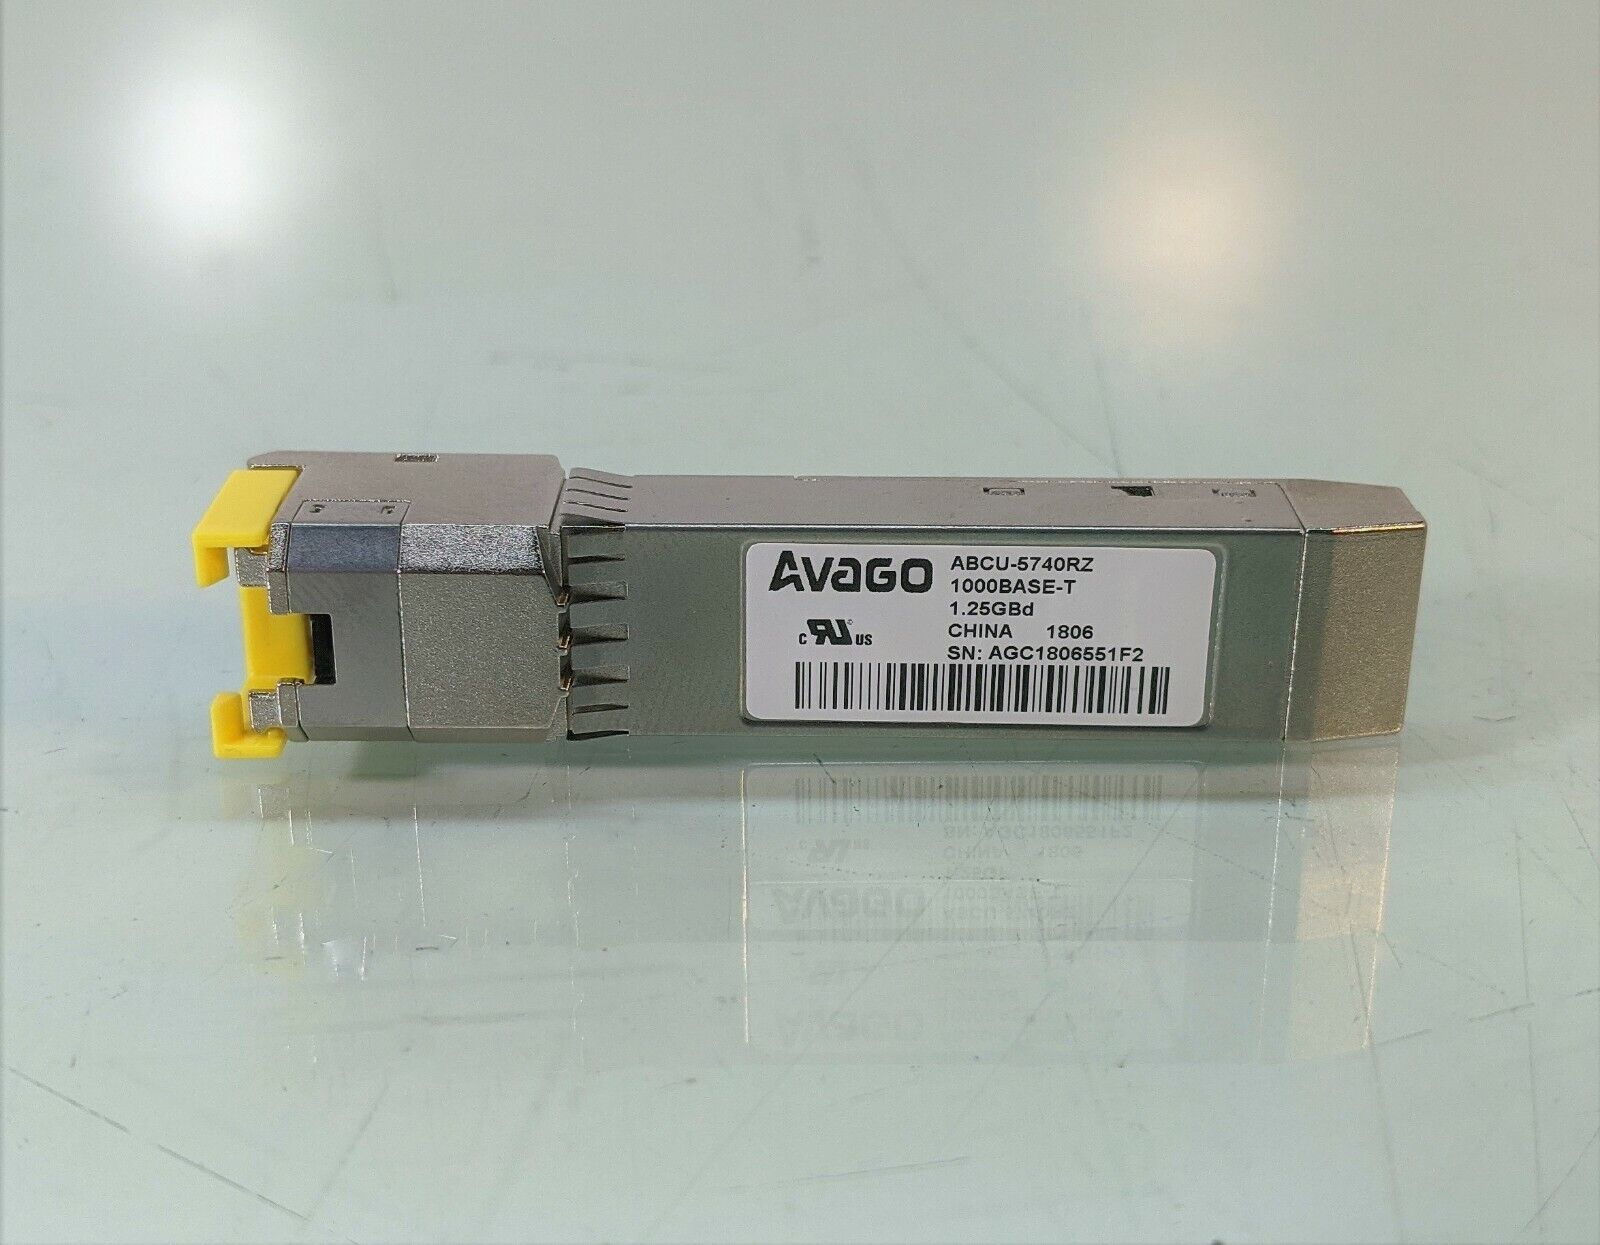 Avago ABCU-5740RZ 1000BASE-T SFP TRANSCEIVER MODULE